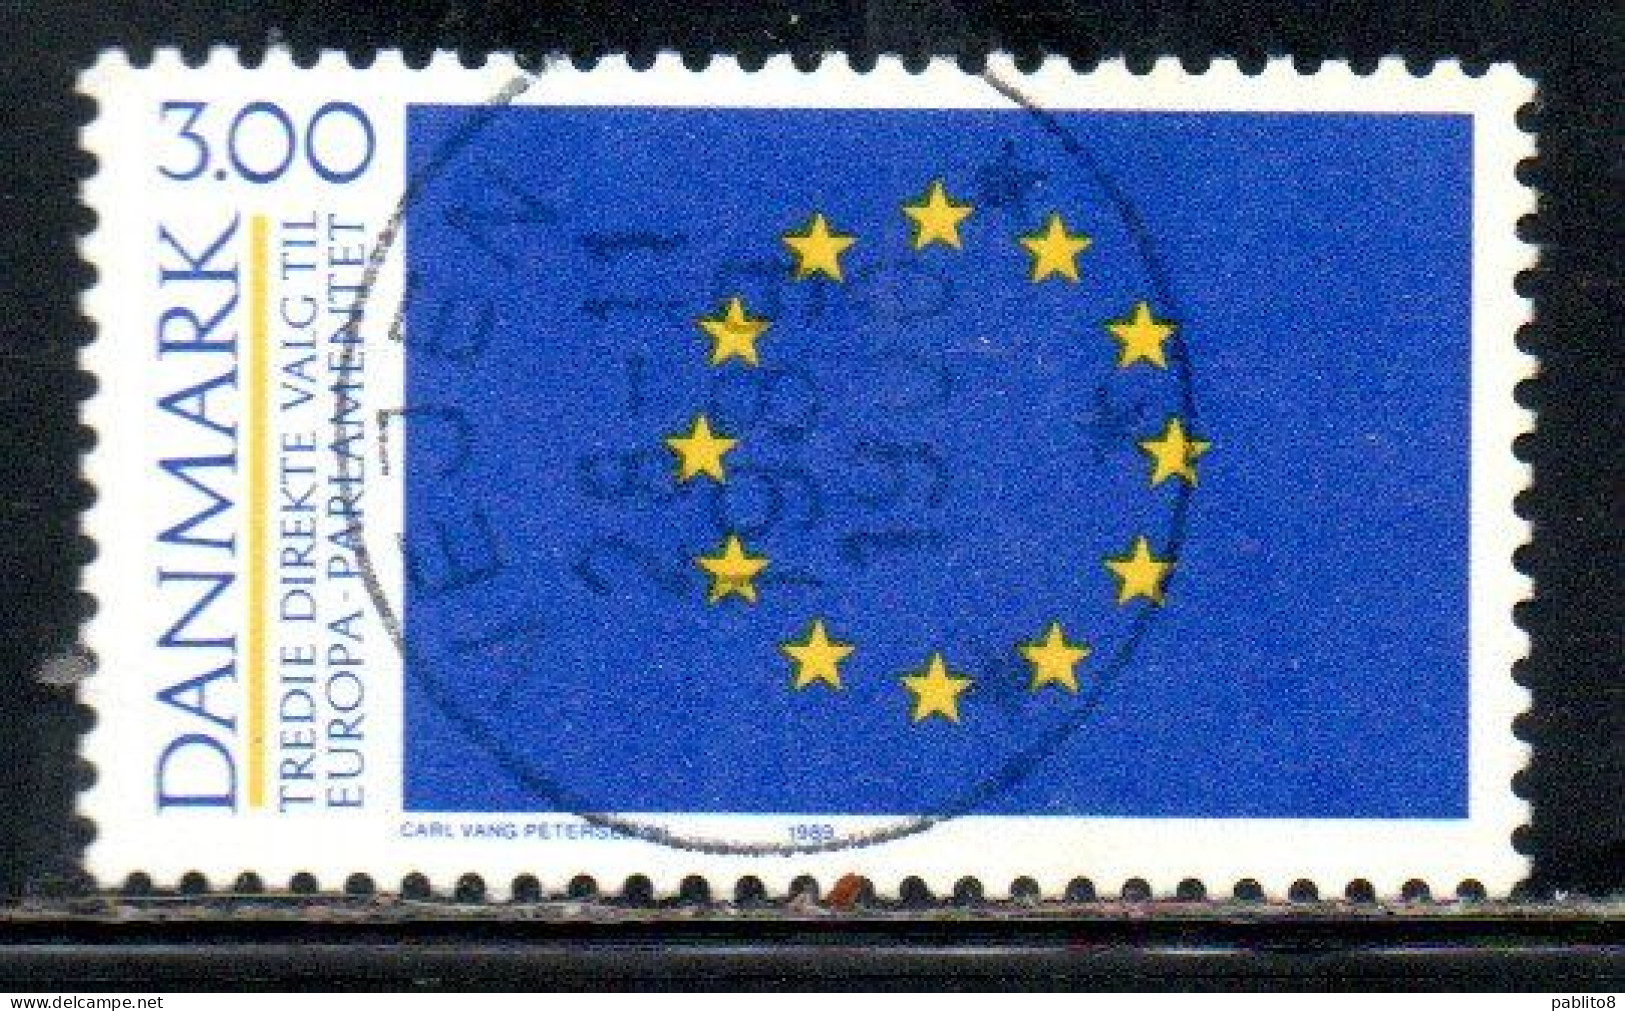 DANEMARK DANMARK DENMARK DANIMARCA 1989 EUROPEAN PARLIAMENT ELECTIONS 3k USED USATO OBLITERE' - Used Stamps